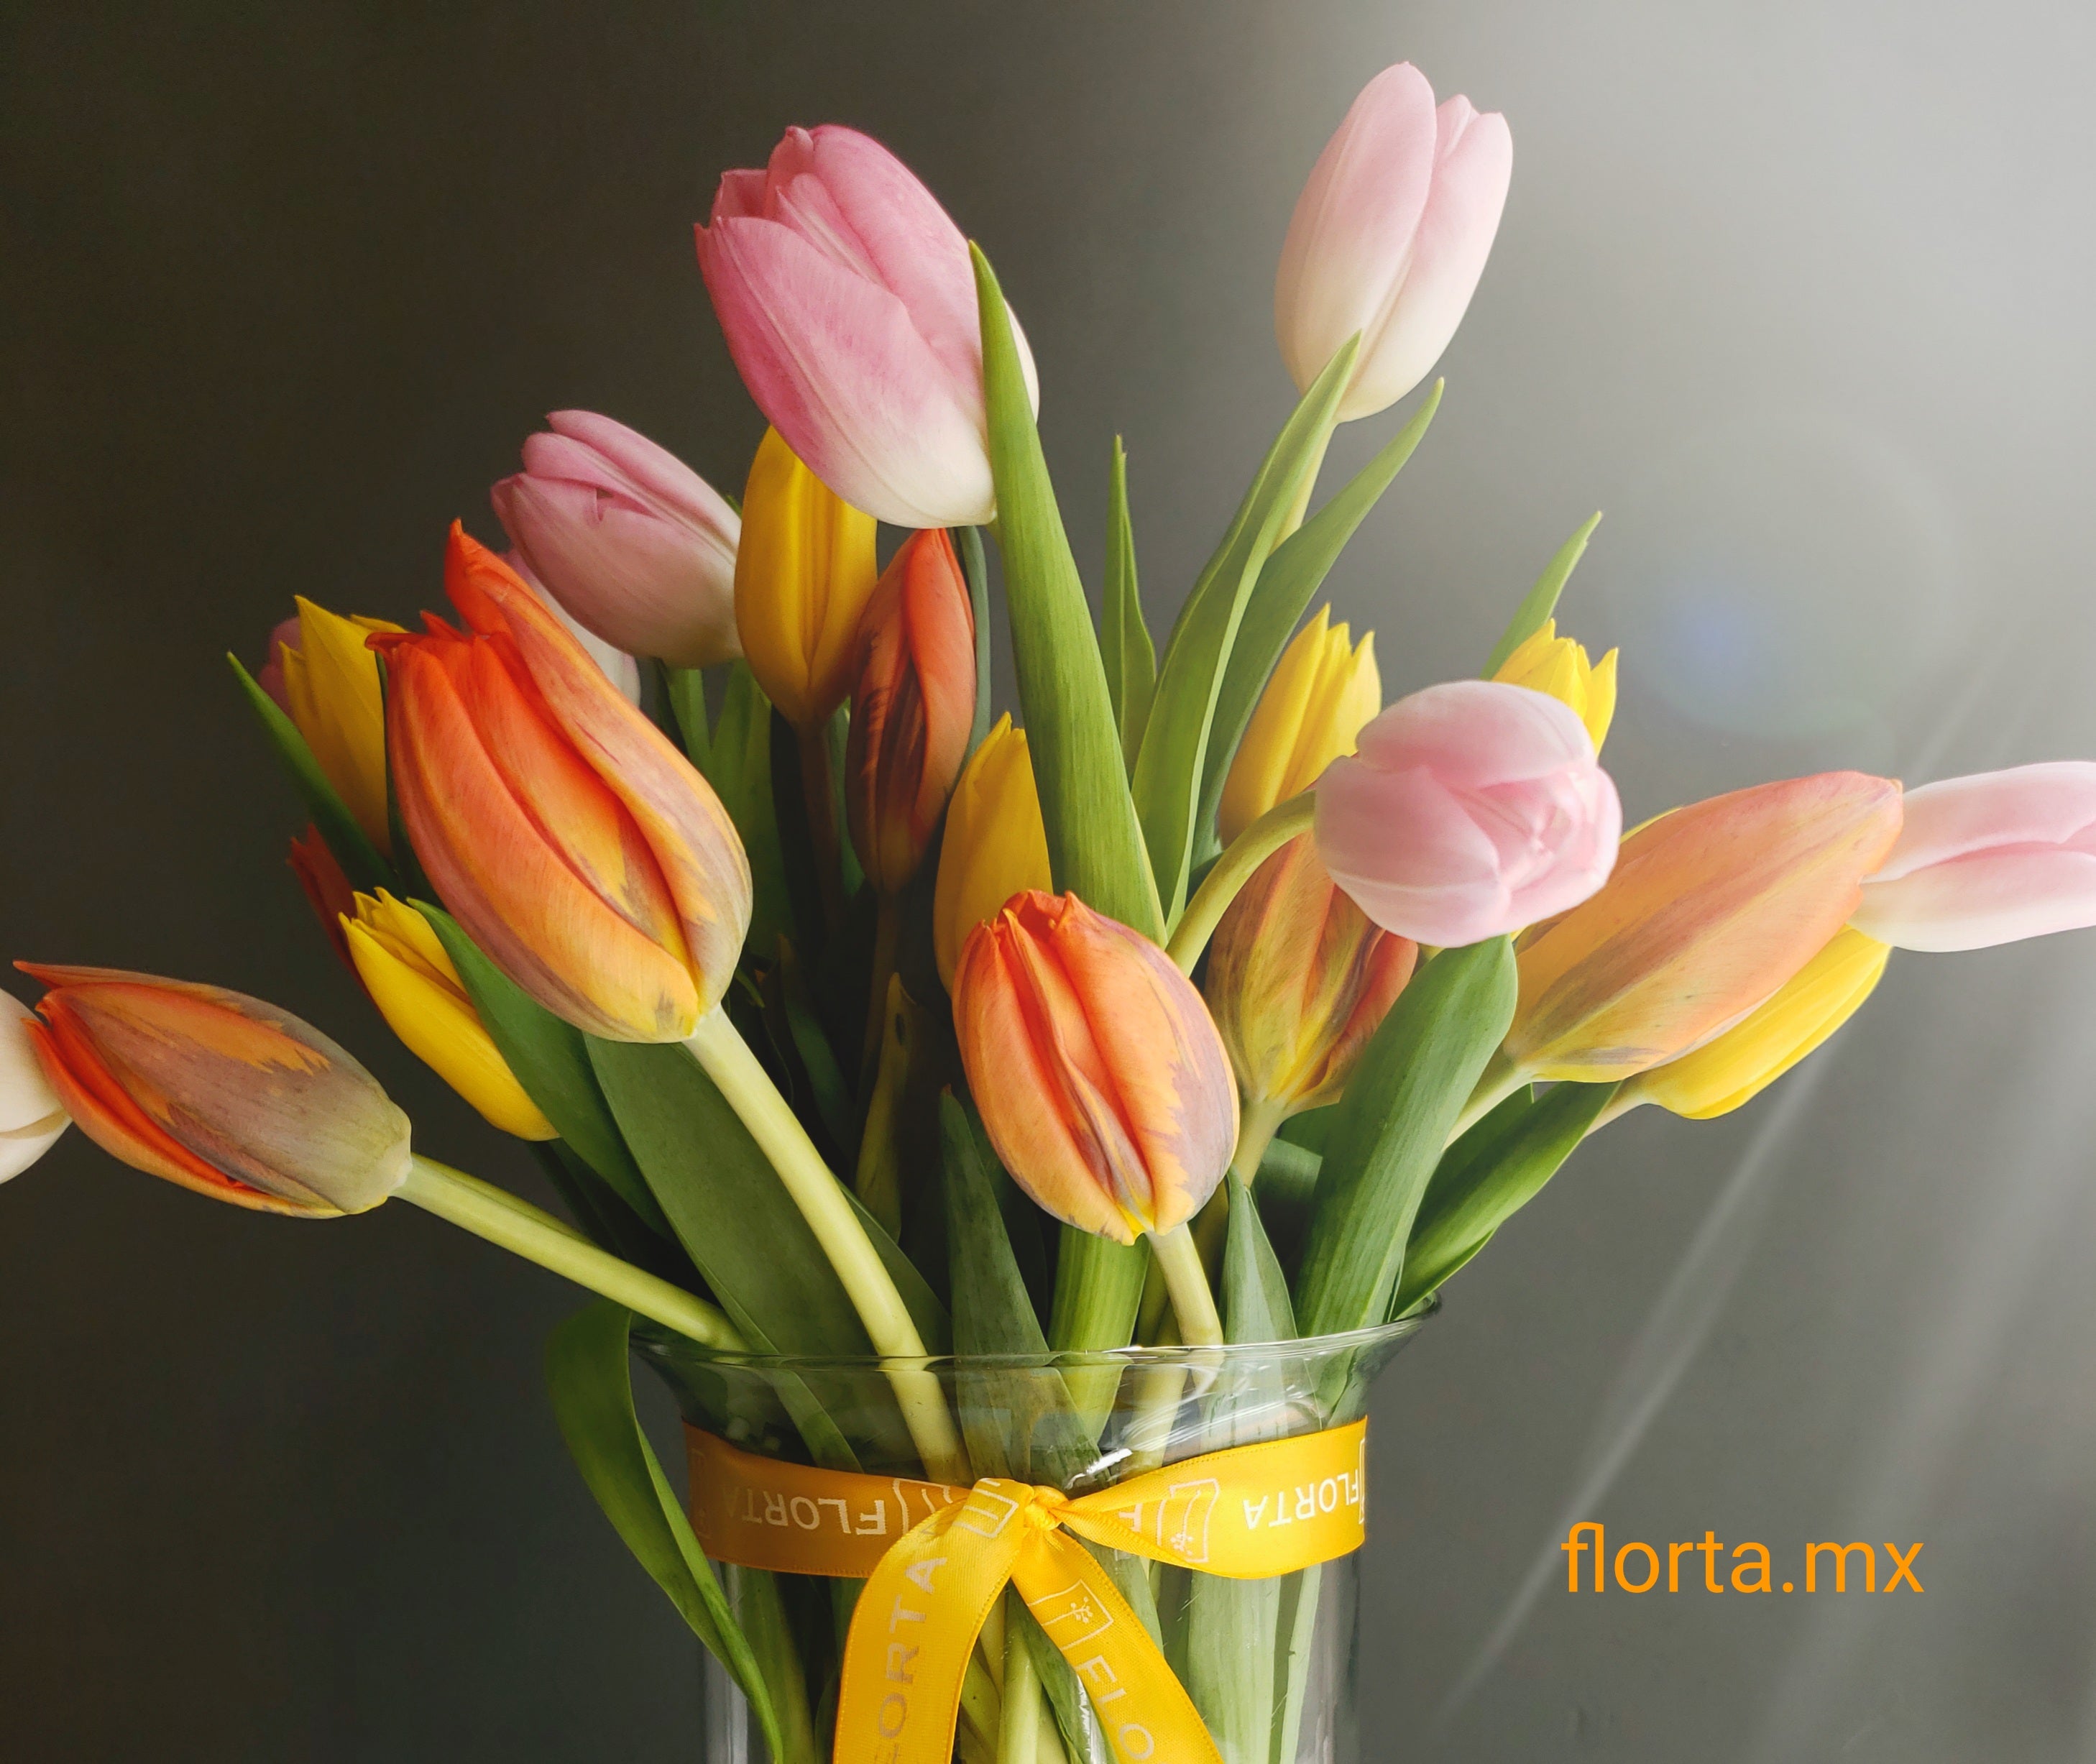 Amor en Tulipanes – florta.mx